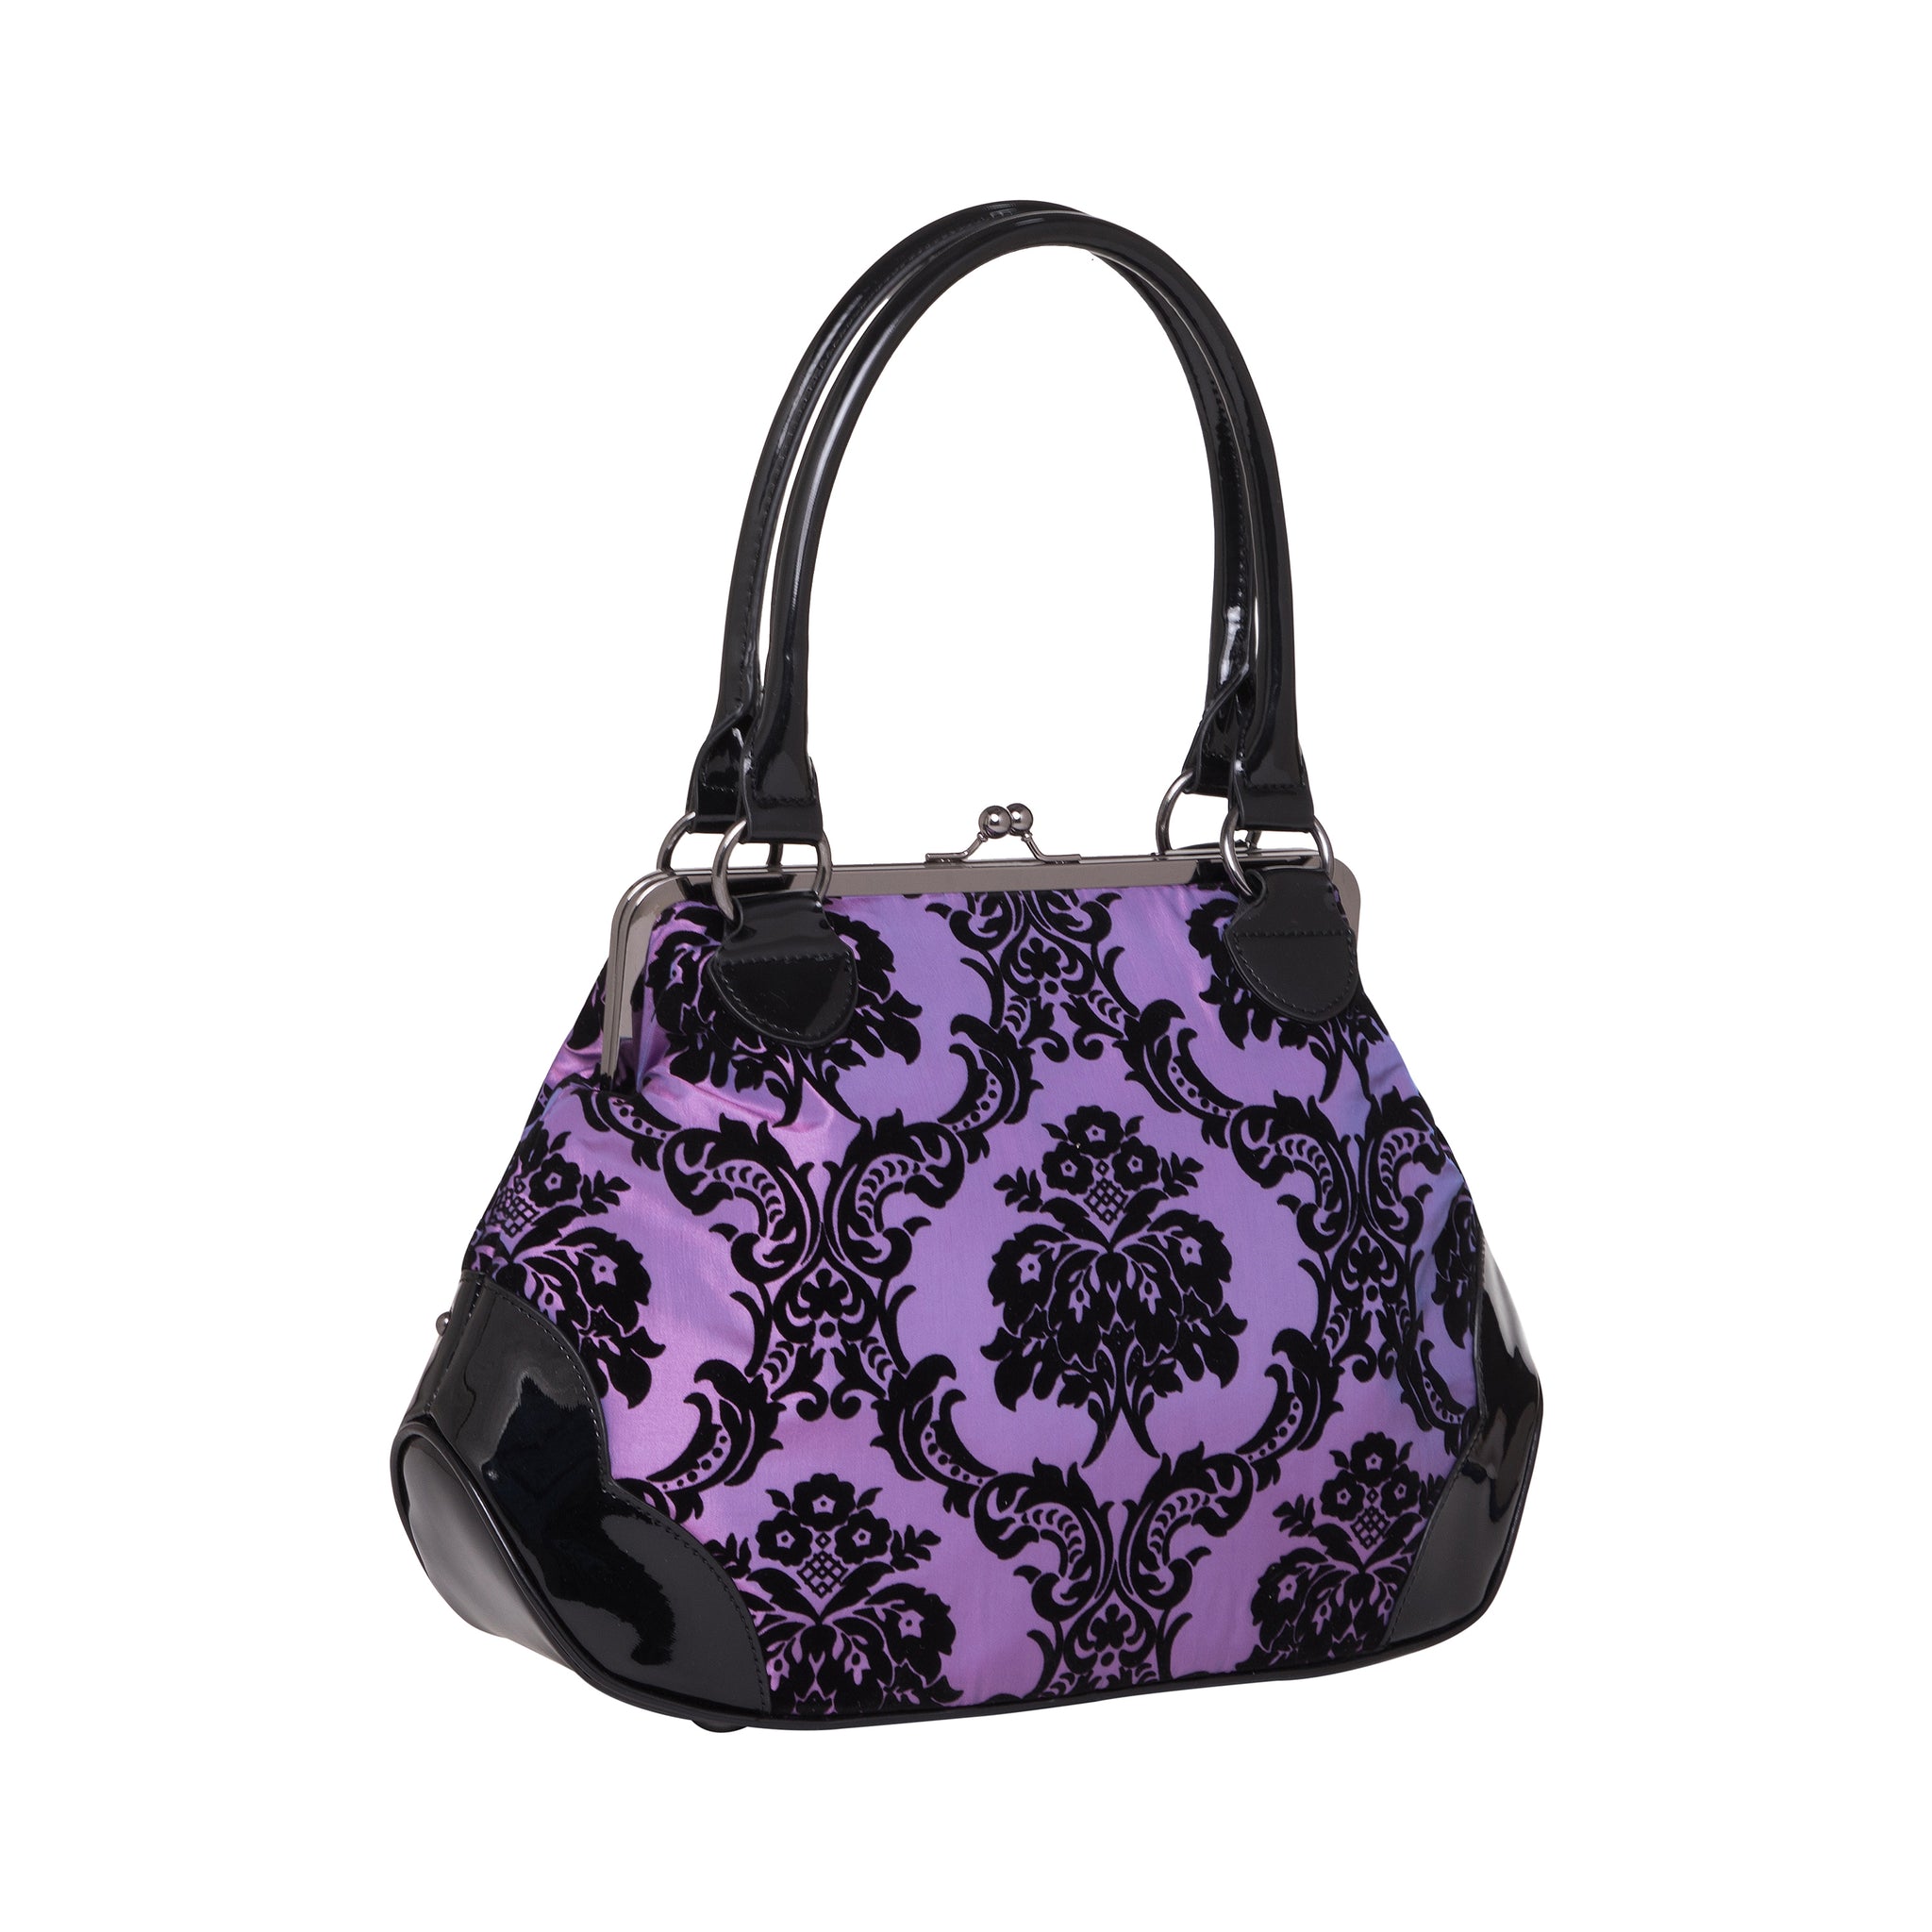 Rock Rebel Mistress Black on Royal Purple Handbag Violet Victorian Damask Retro Kisslock Purse